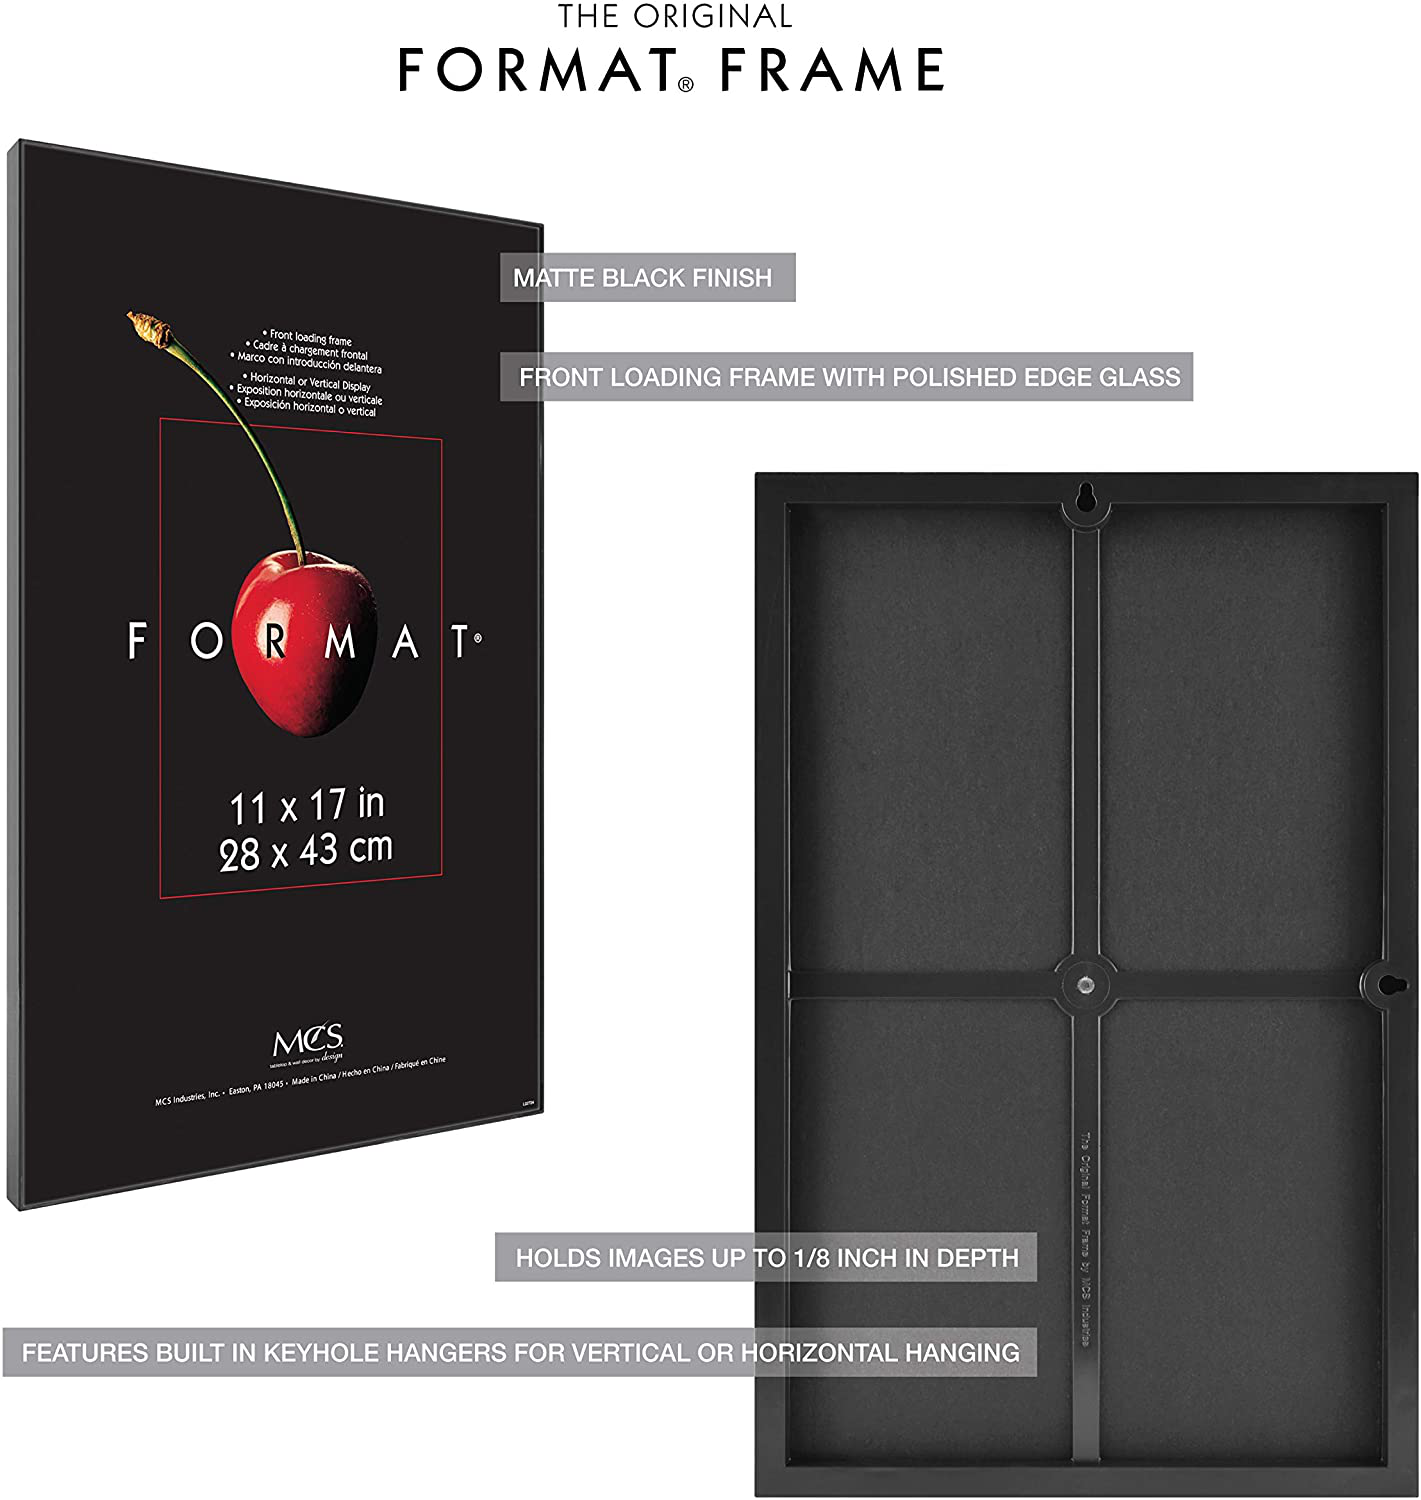 MCS 11x17 Inch Format 6-Pack, White Frames, 11 x 17